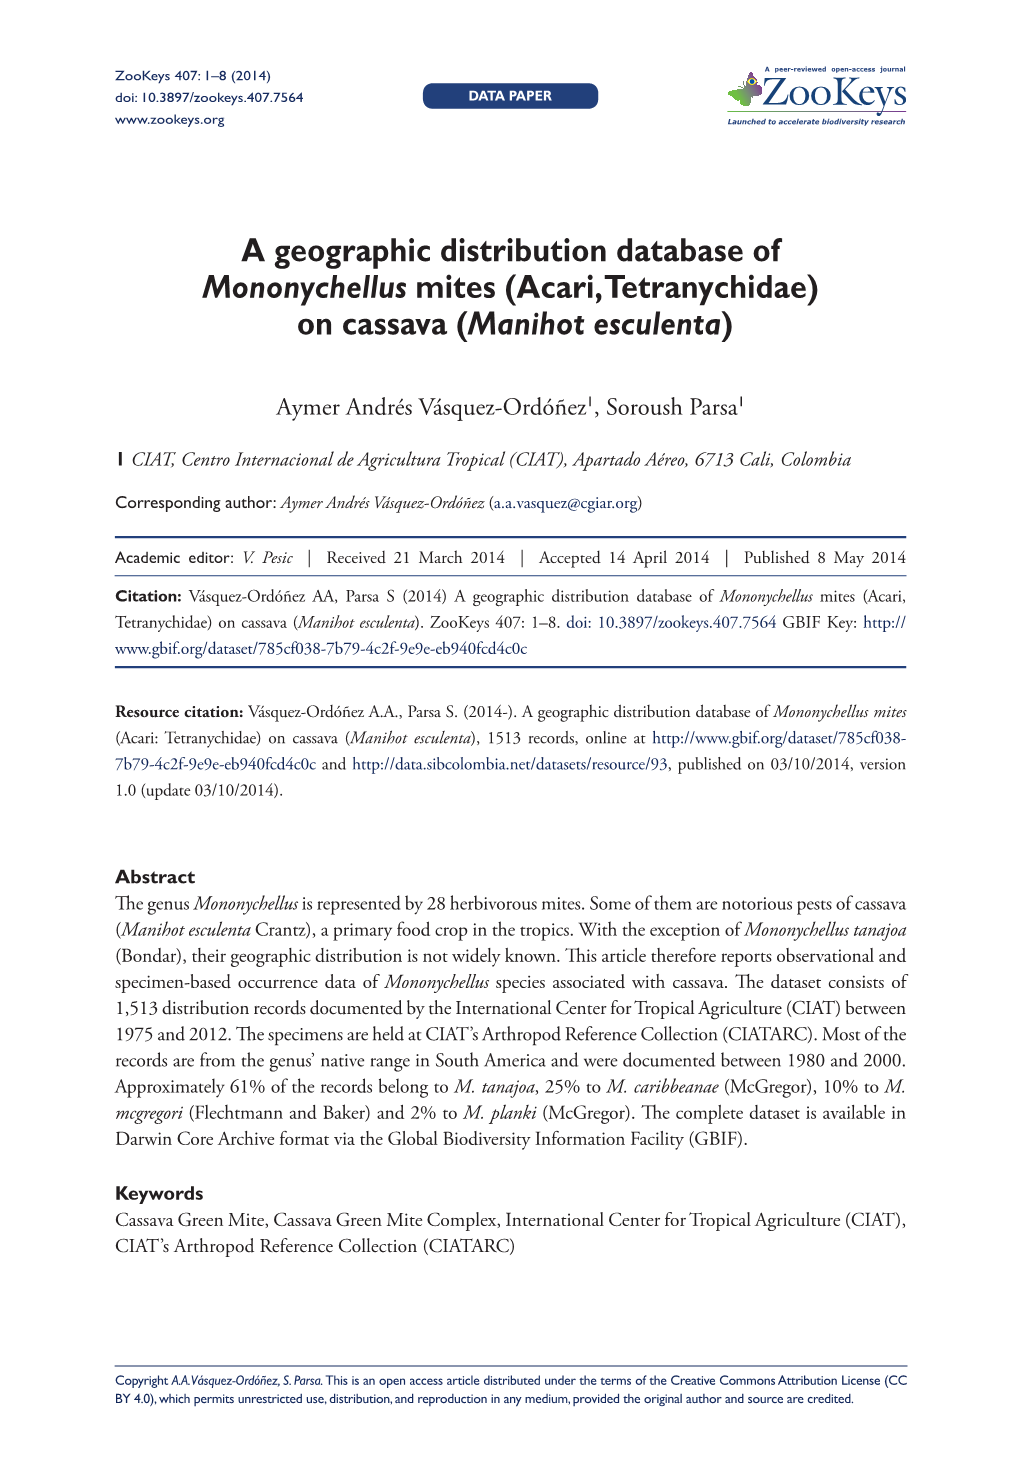 A Geographic Distribution Database of Mononychellus Mites (Acari, Tetranychidae) on Cassava (Manihot Esculenta)